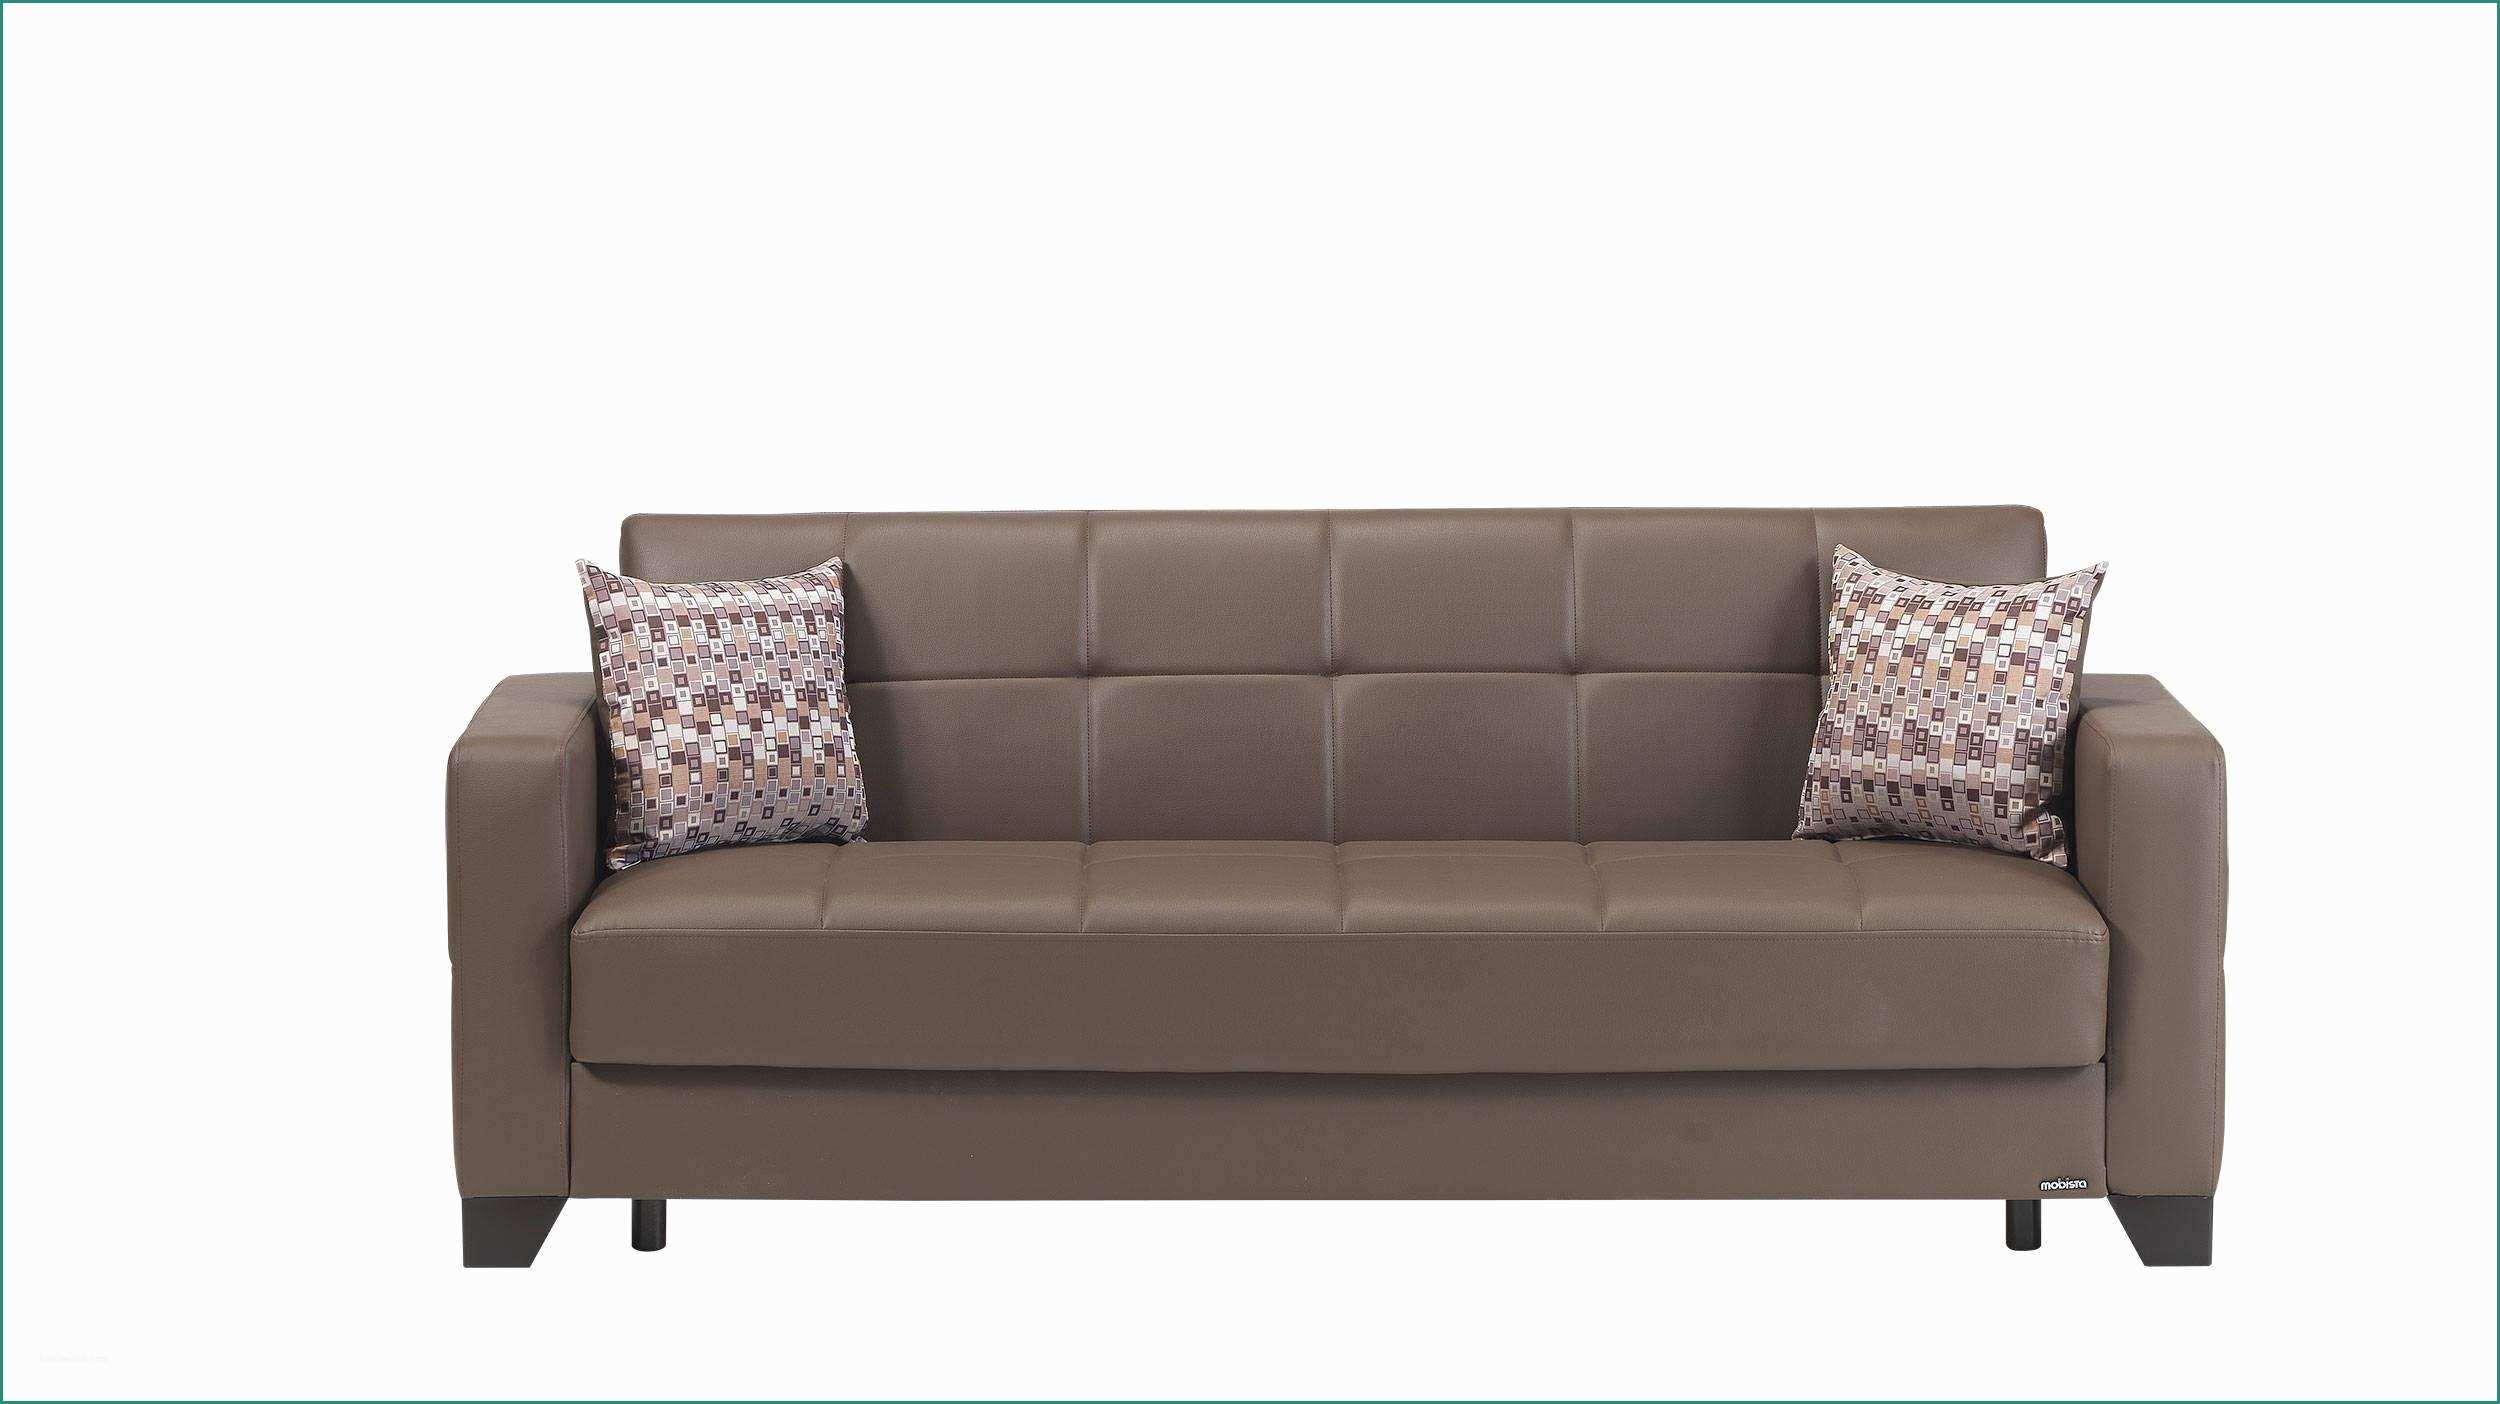 Poltrona Chaise Longue E sofa Und Bett Neu 19 Luxury sofa Aus Bett Bauen Fotos – Schlafsofa